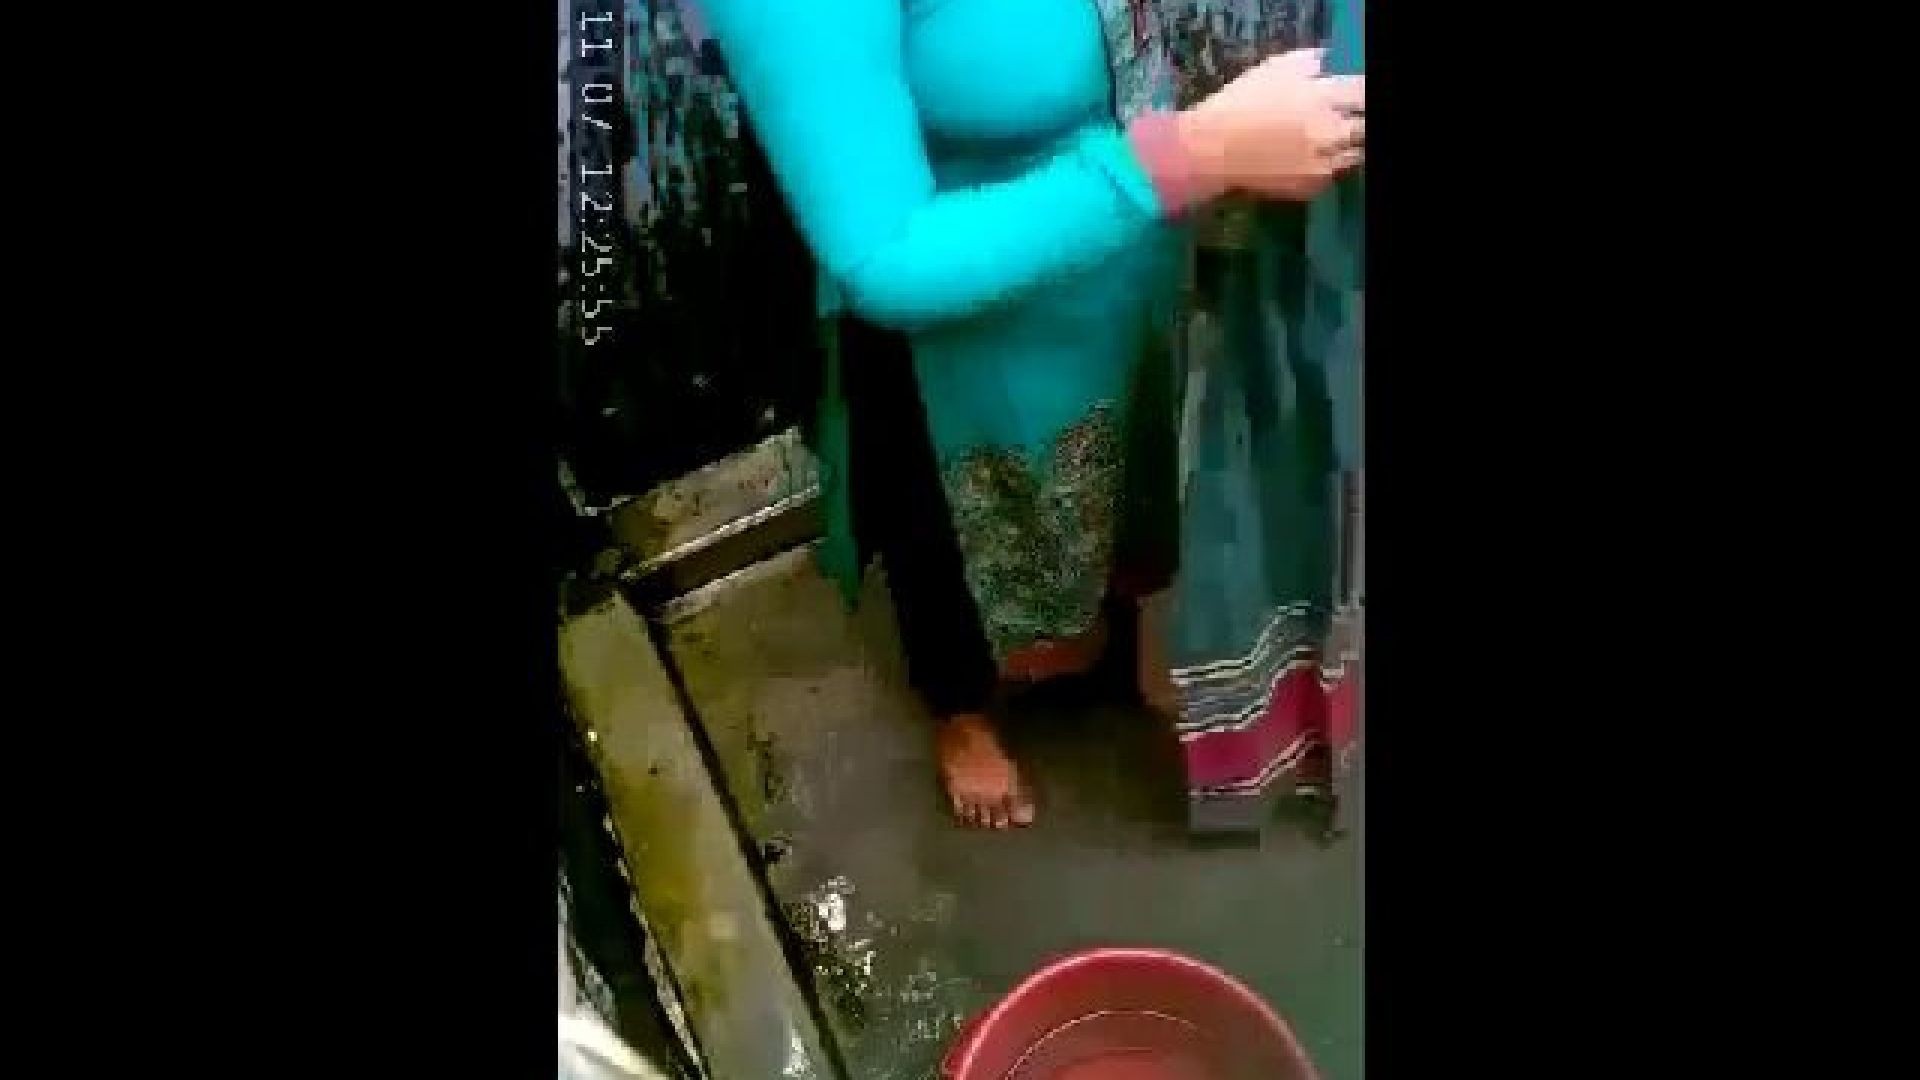 Desi Village Girl Bathing